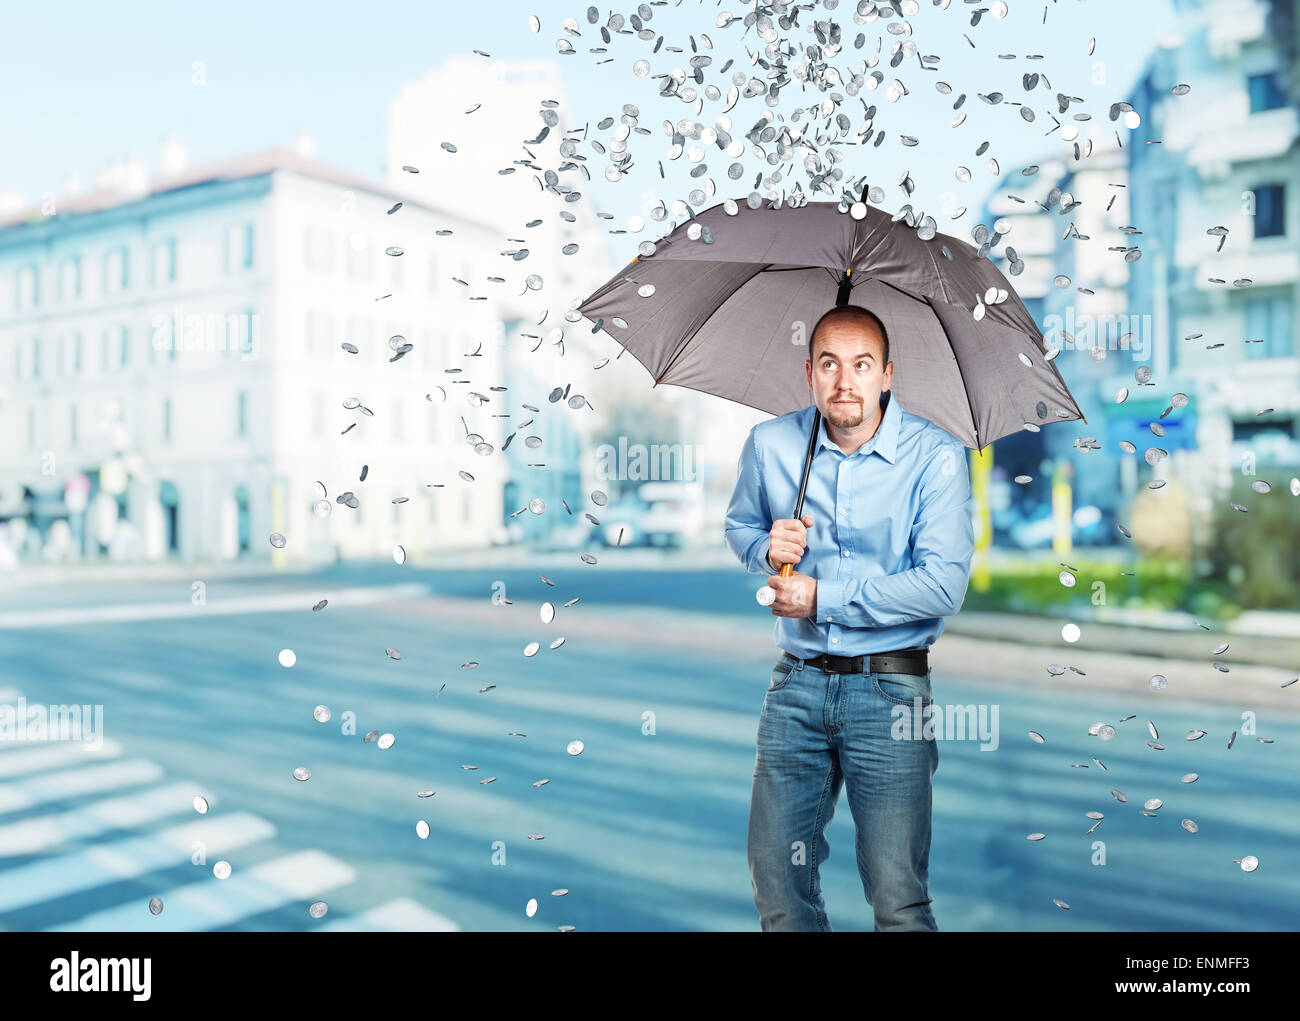 man with umbrella and dollar coin rain Stock Photo